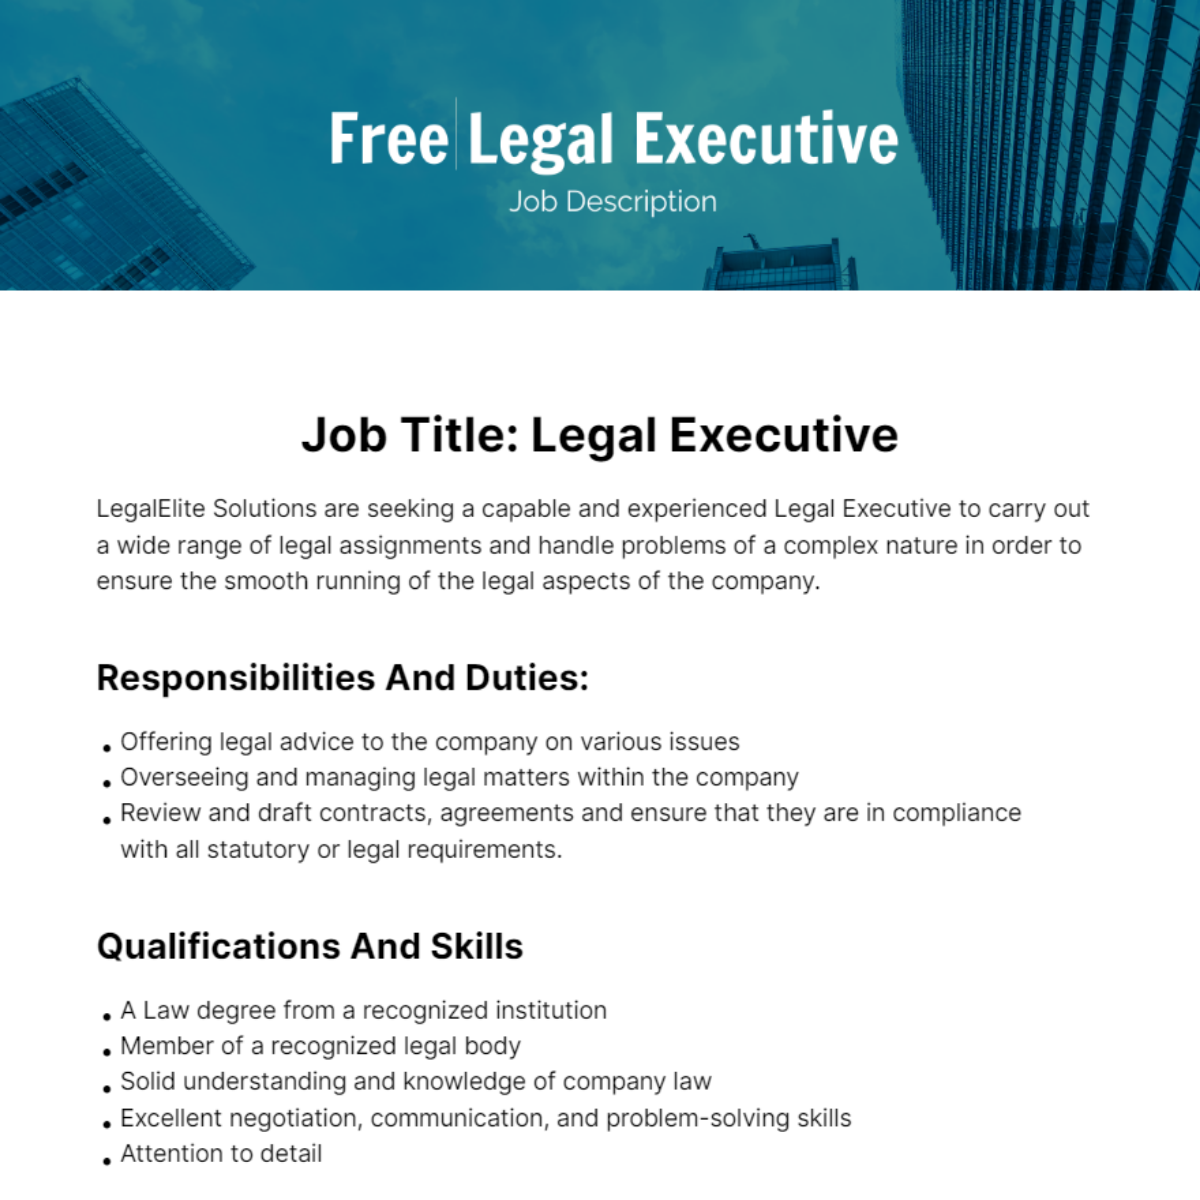 Legal Executive Job Description Template